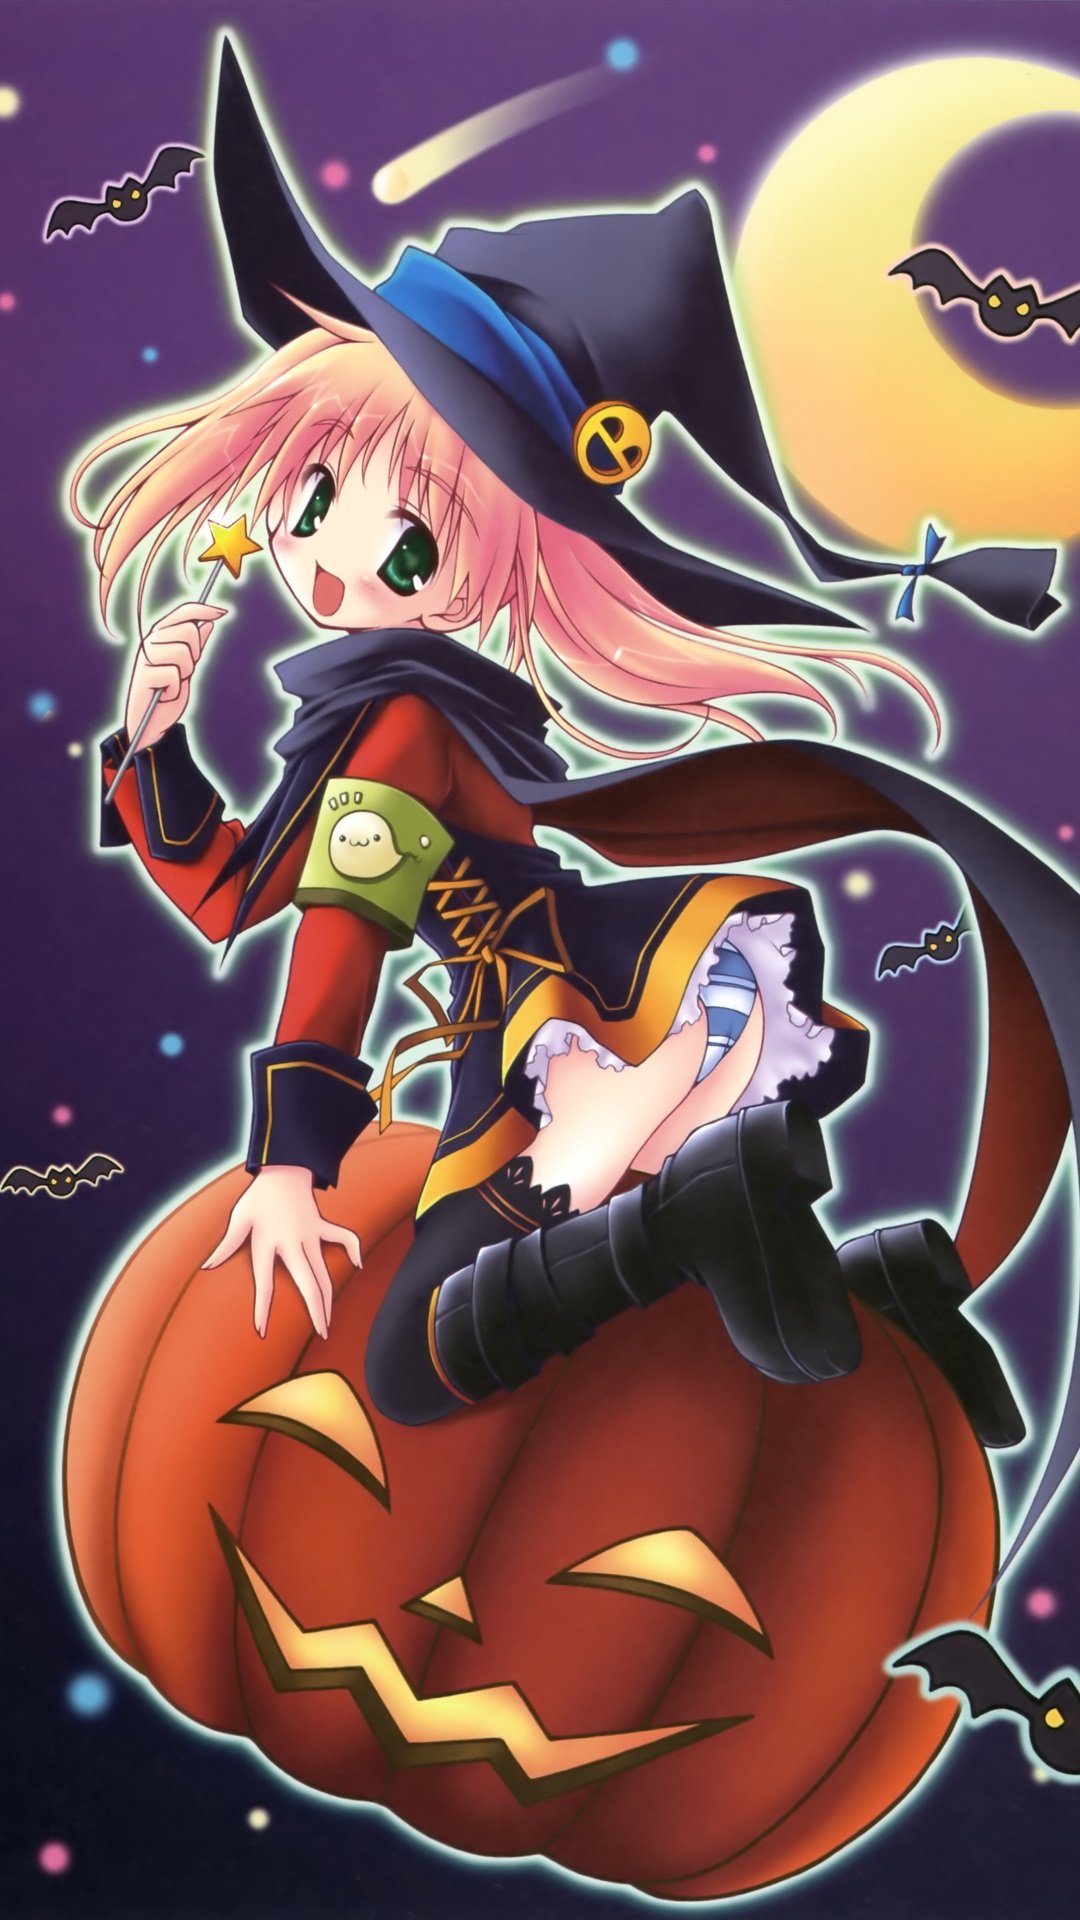 HD wallpaper: Danganronpa, Halloween, witch, anime girls, Jack O Lantern |  Wallpaper Flare